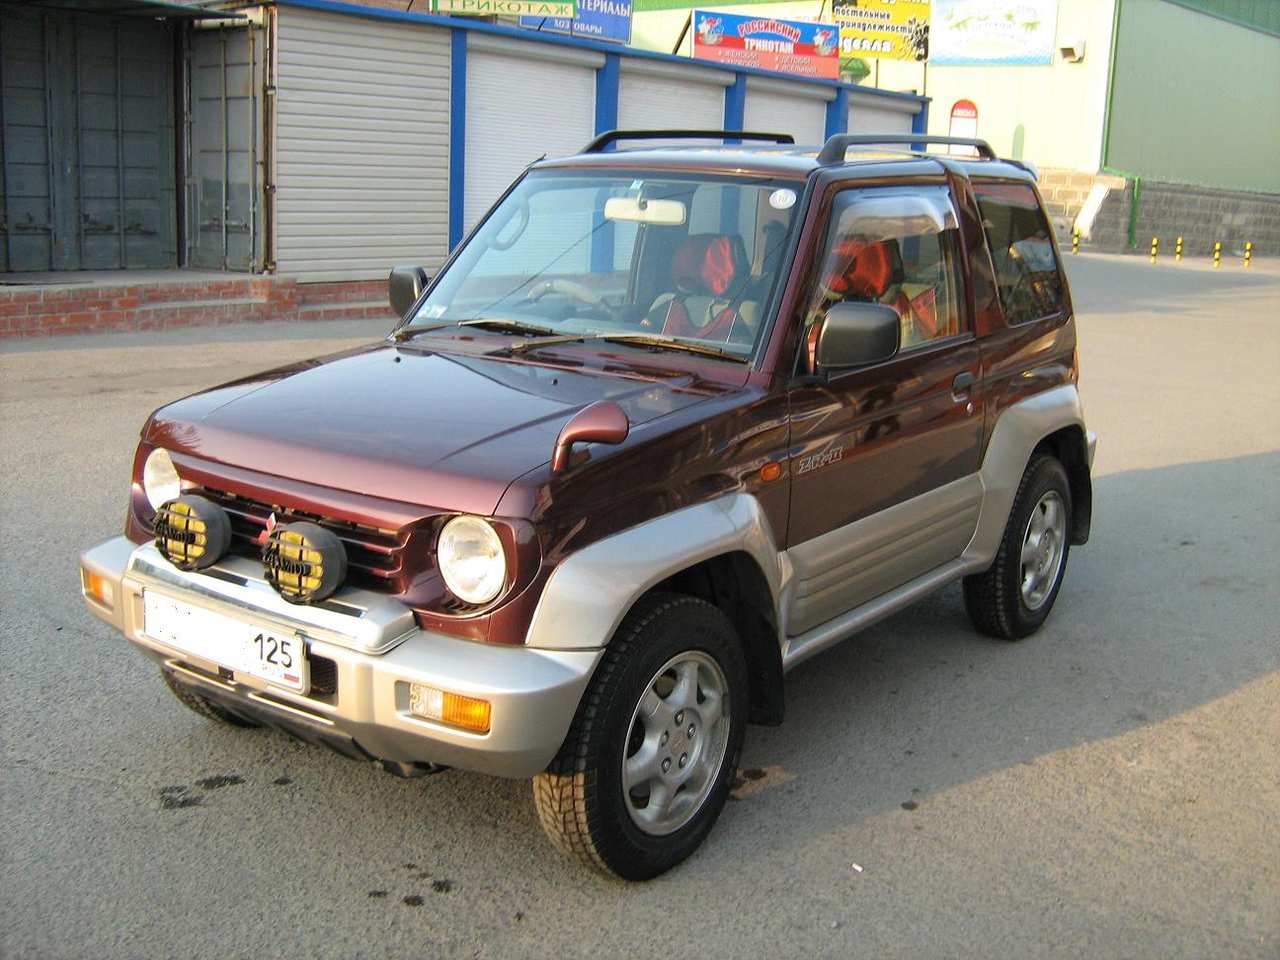 Mitsubishi junior. Mitsubishi Pajero Junior, 1996. Мицубиси Паджеро Юниор. Мицубиси Паджеро Джуниор 1996. Митсубиси Паджеро Джуниор 1.1.